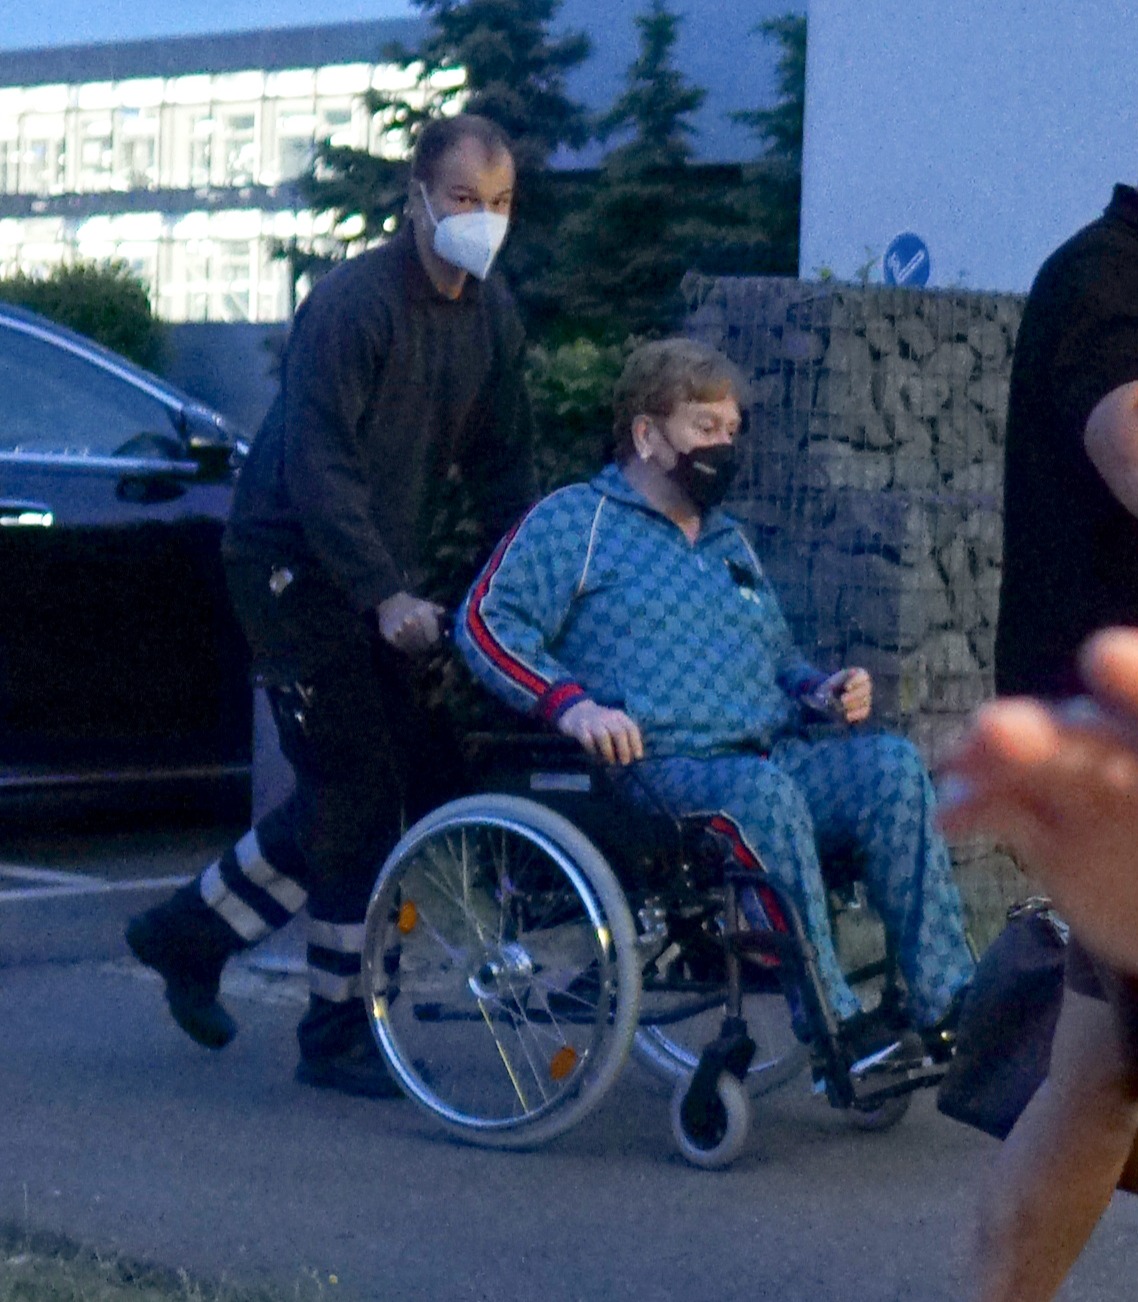 Elton John, 75, is in a wheelchair ahead of Queen’s Jubilee concert as Rod Stewart rehearses